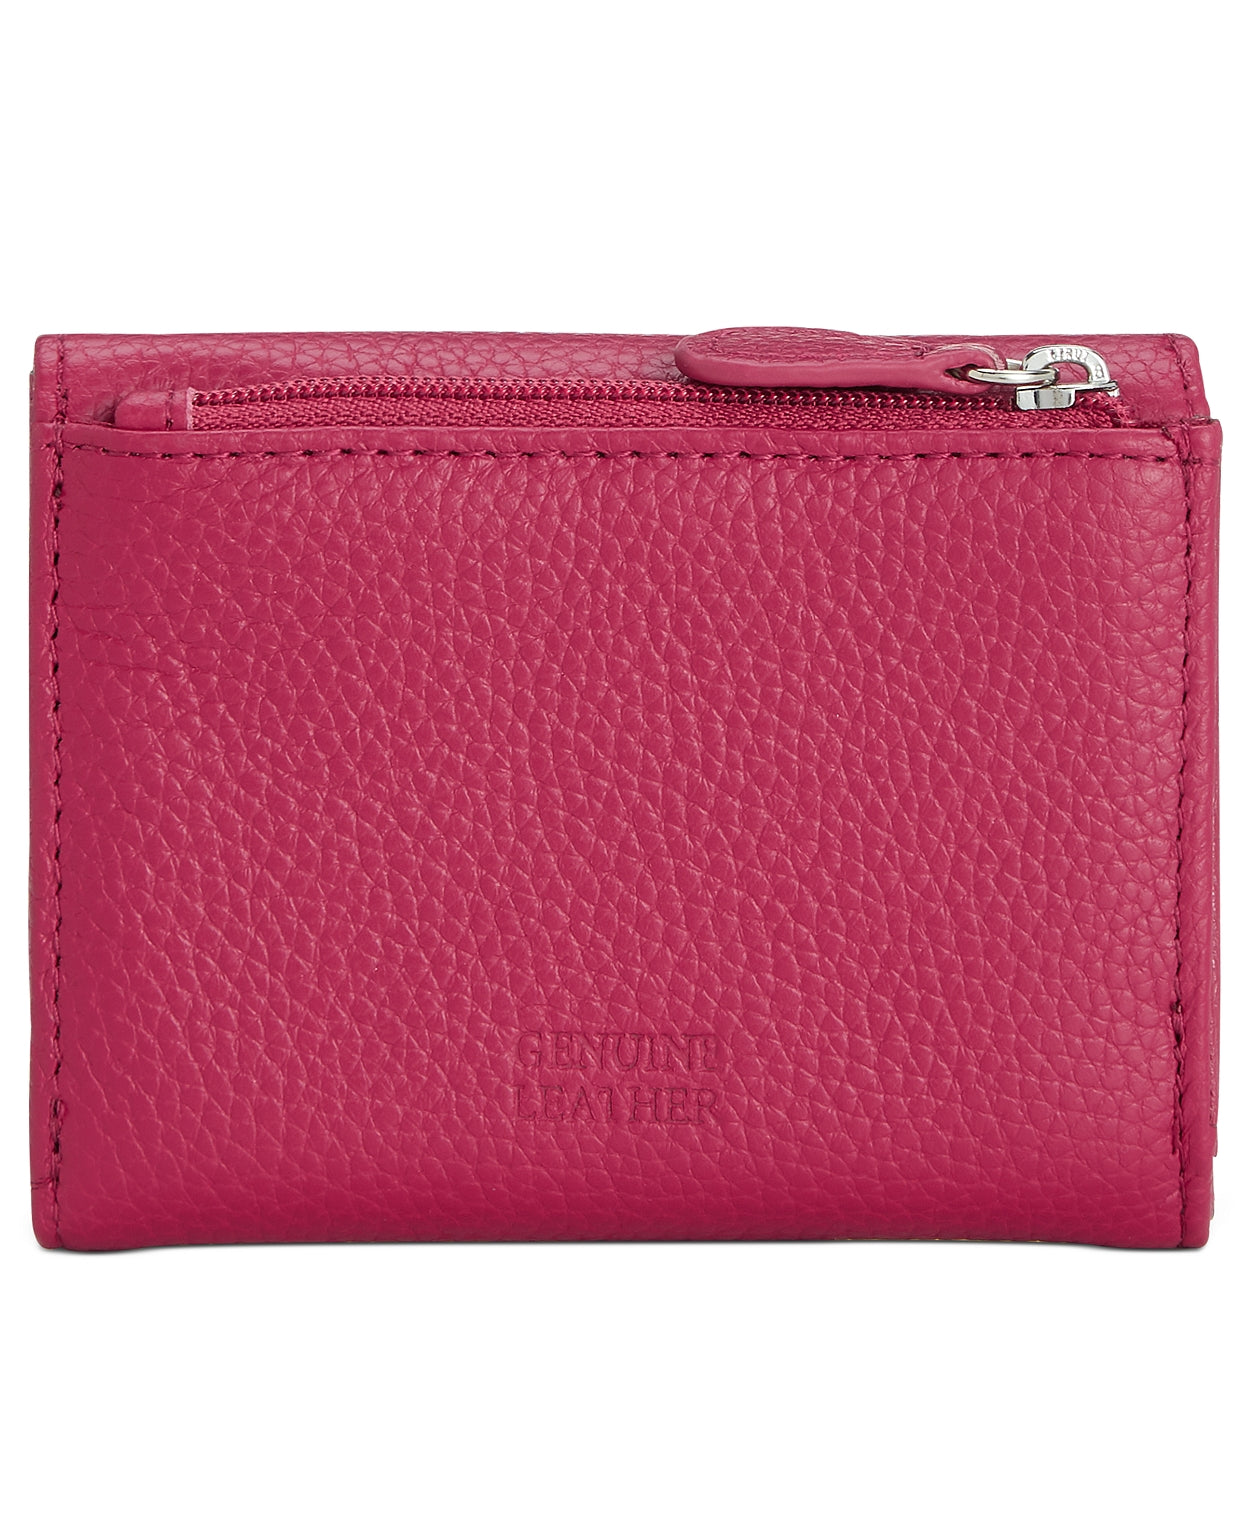 Giani Bernini Womens Softy Leather Trifold Wallet